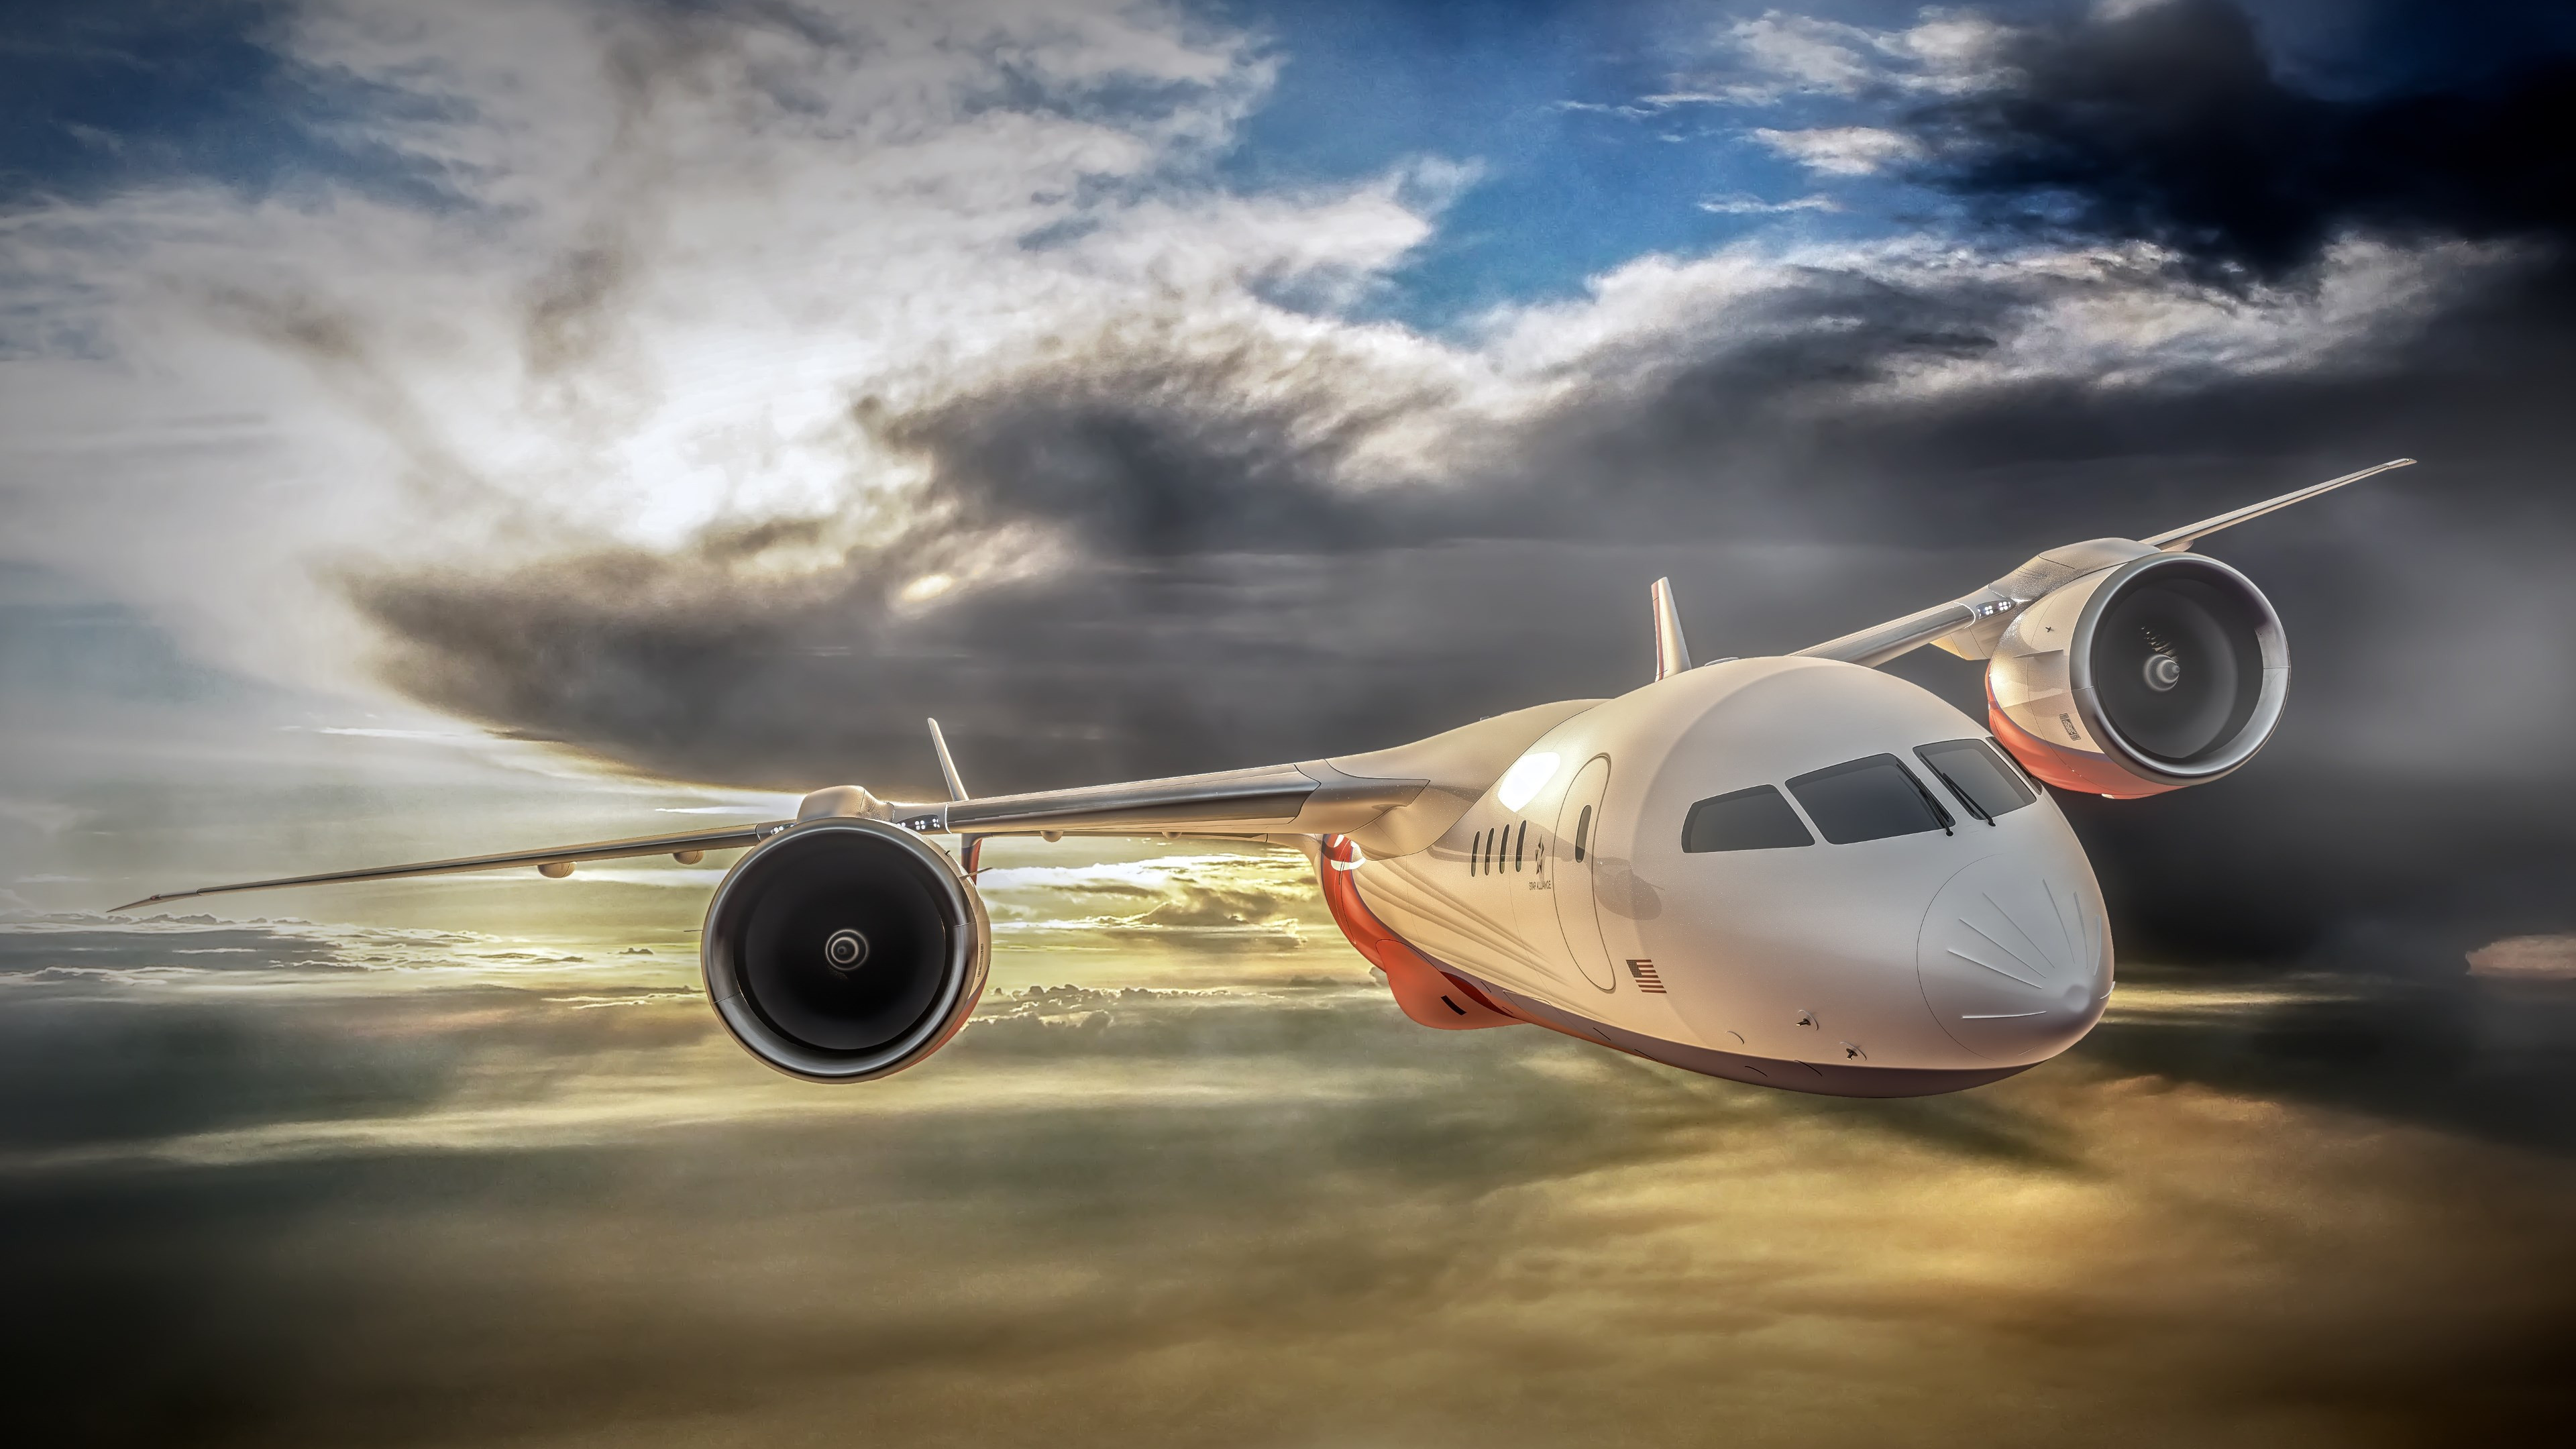 General 3840x2160 landscape storm aircraft Rolls-Royce turbines airplane vehicle sky clouds digital art